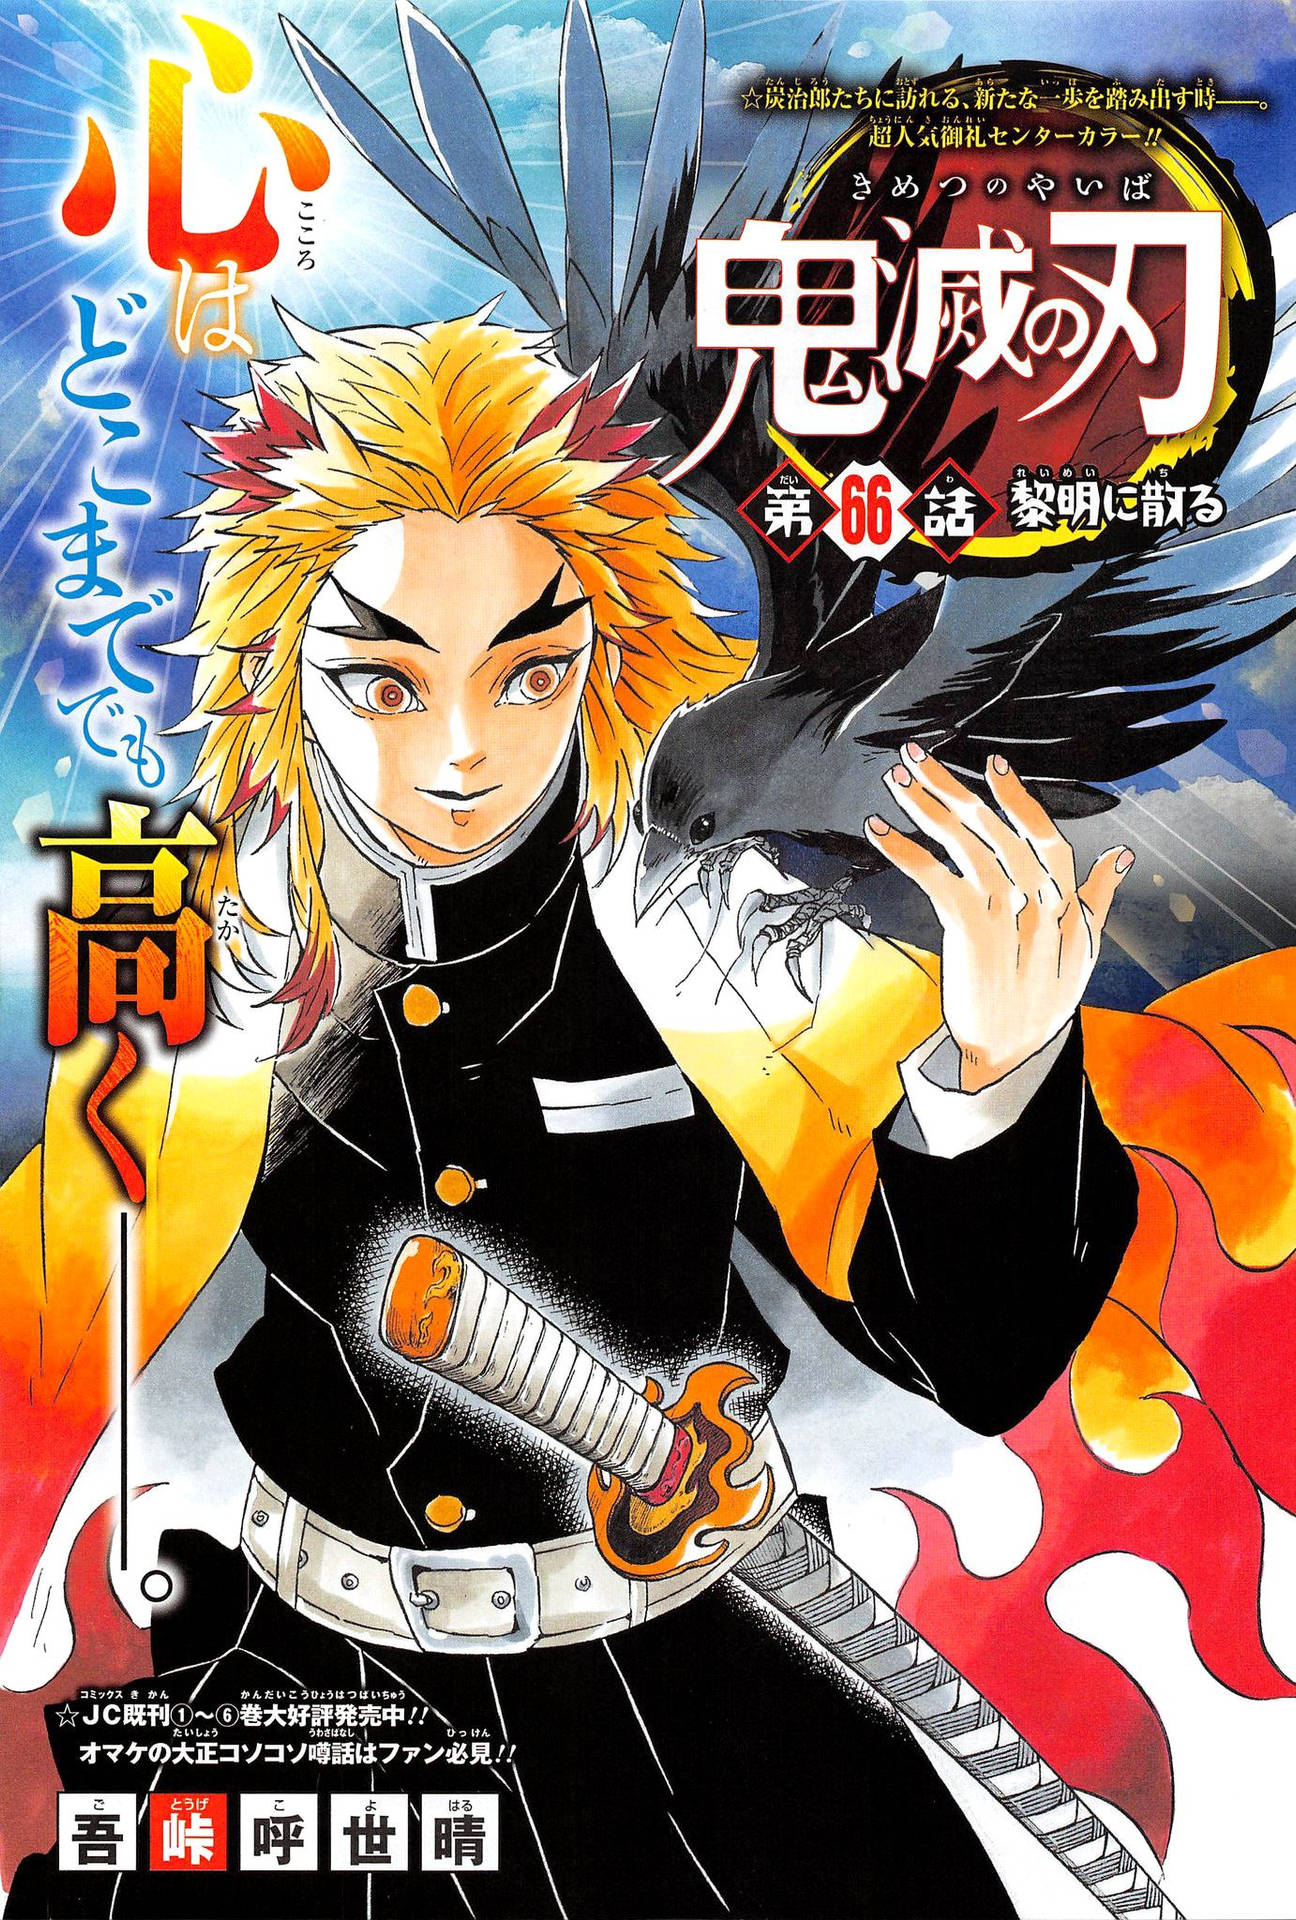 Rengoku holding his crow manga cover wallpaper.